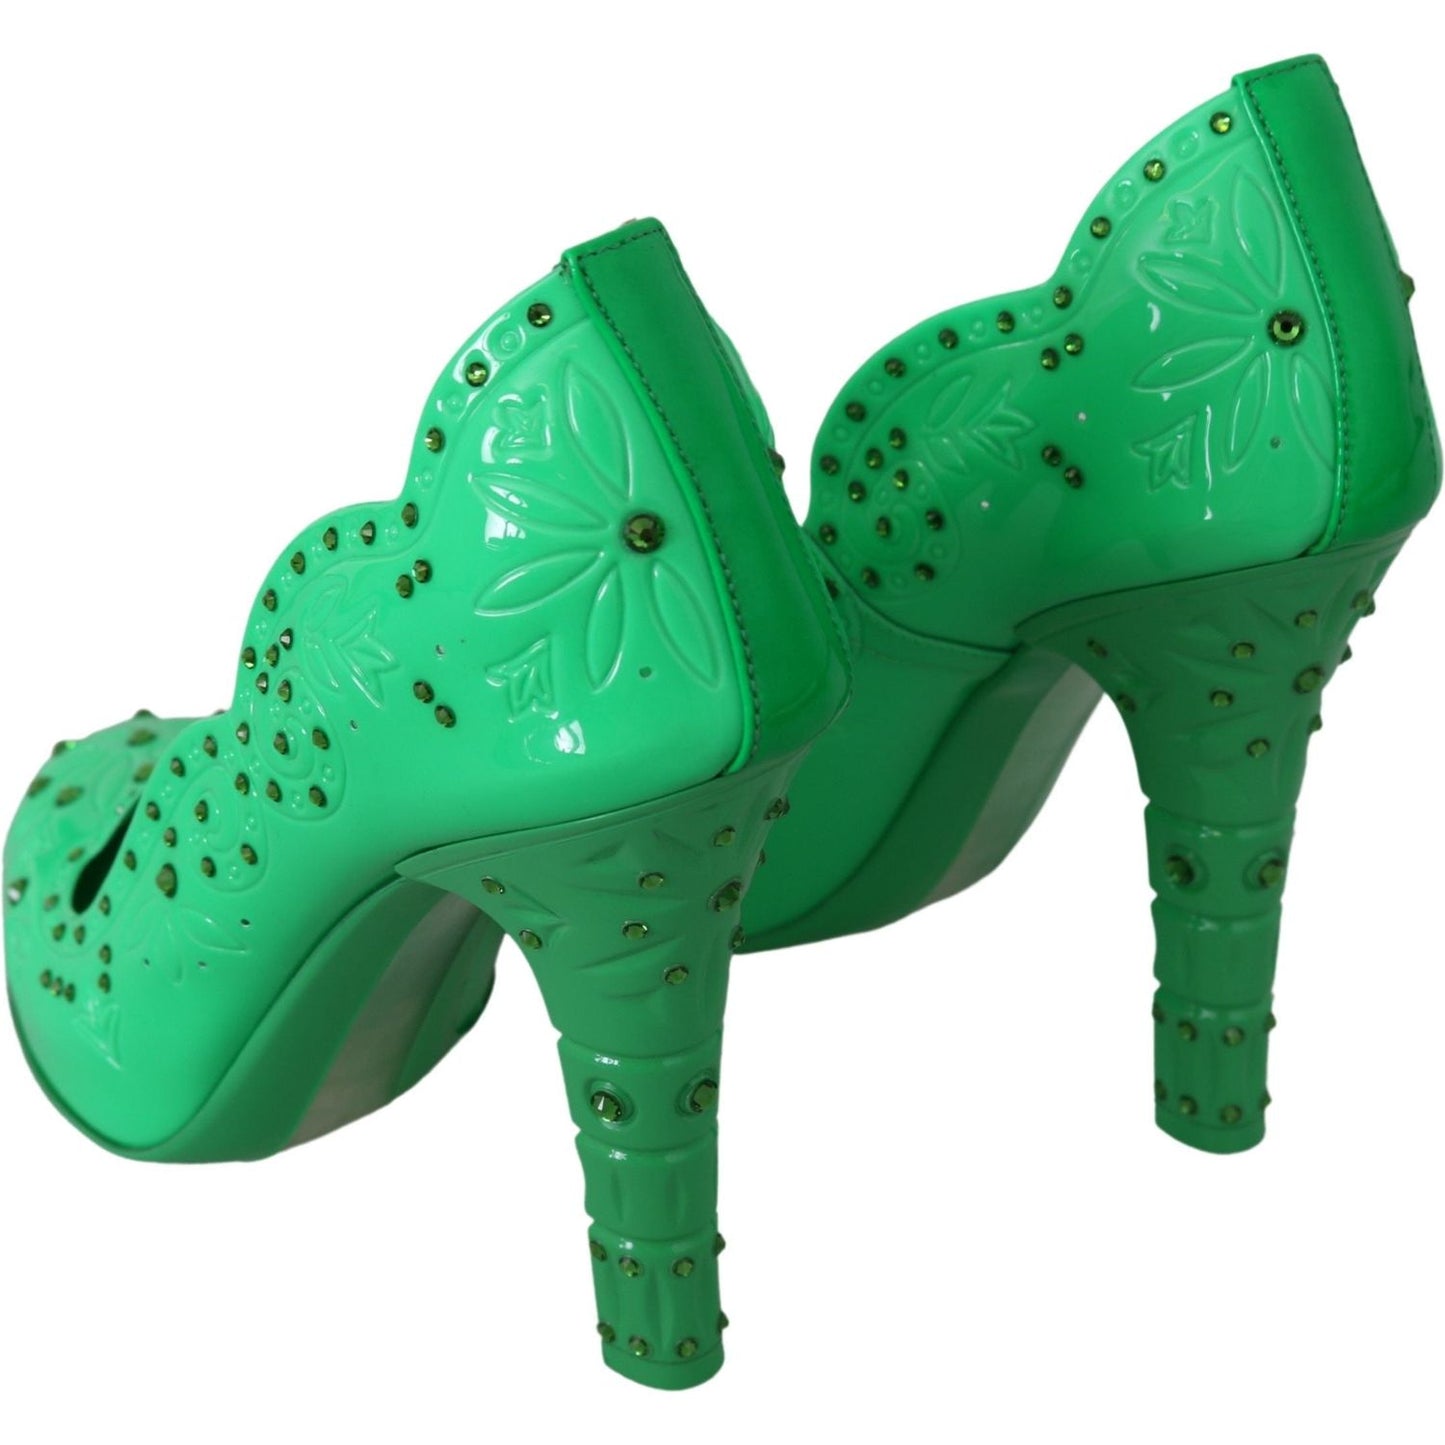 Dolce & Gabbana Enchanting Crystal Cinderella Pumps in Lush Green green-crystal-floral-cinderella-heels-shoes